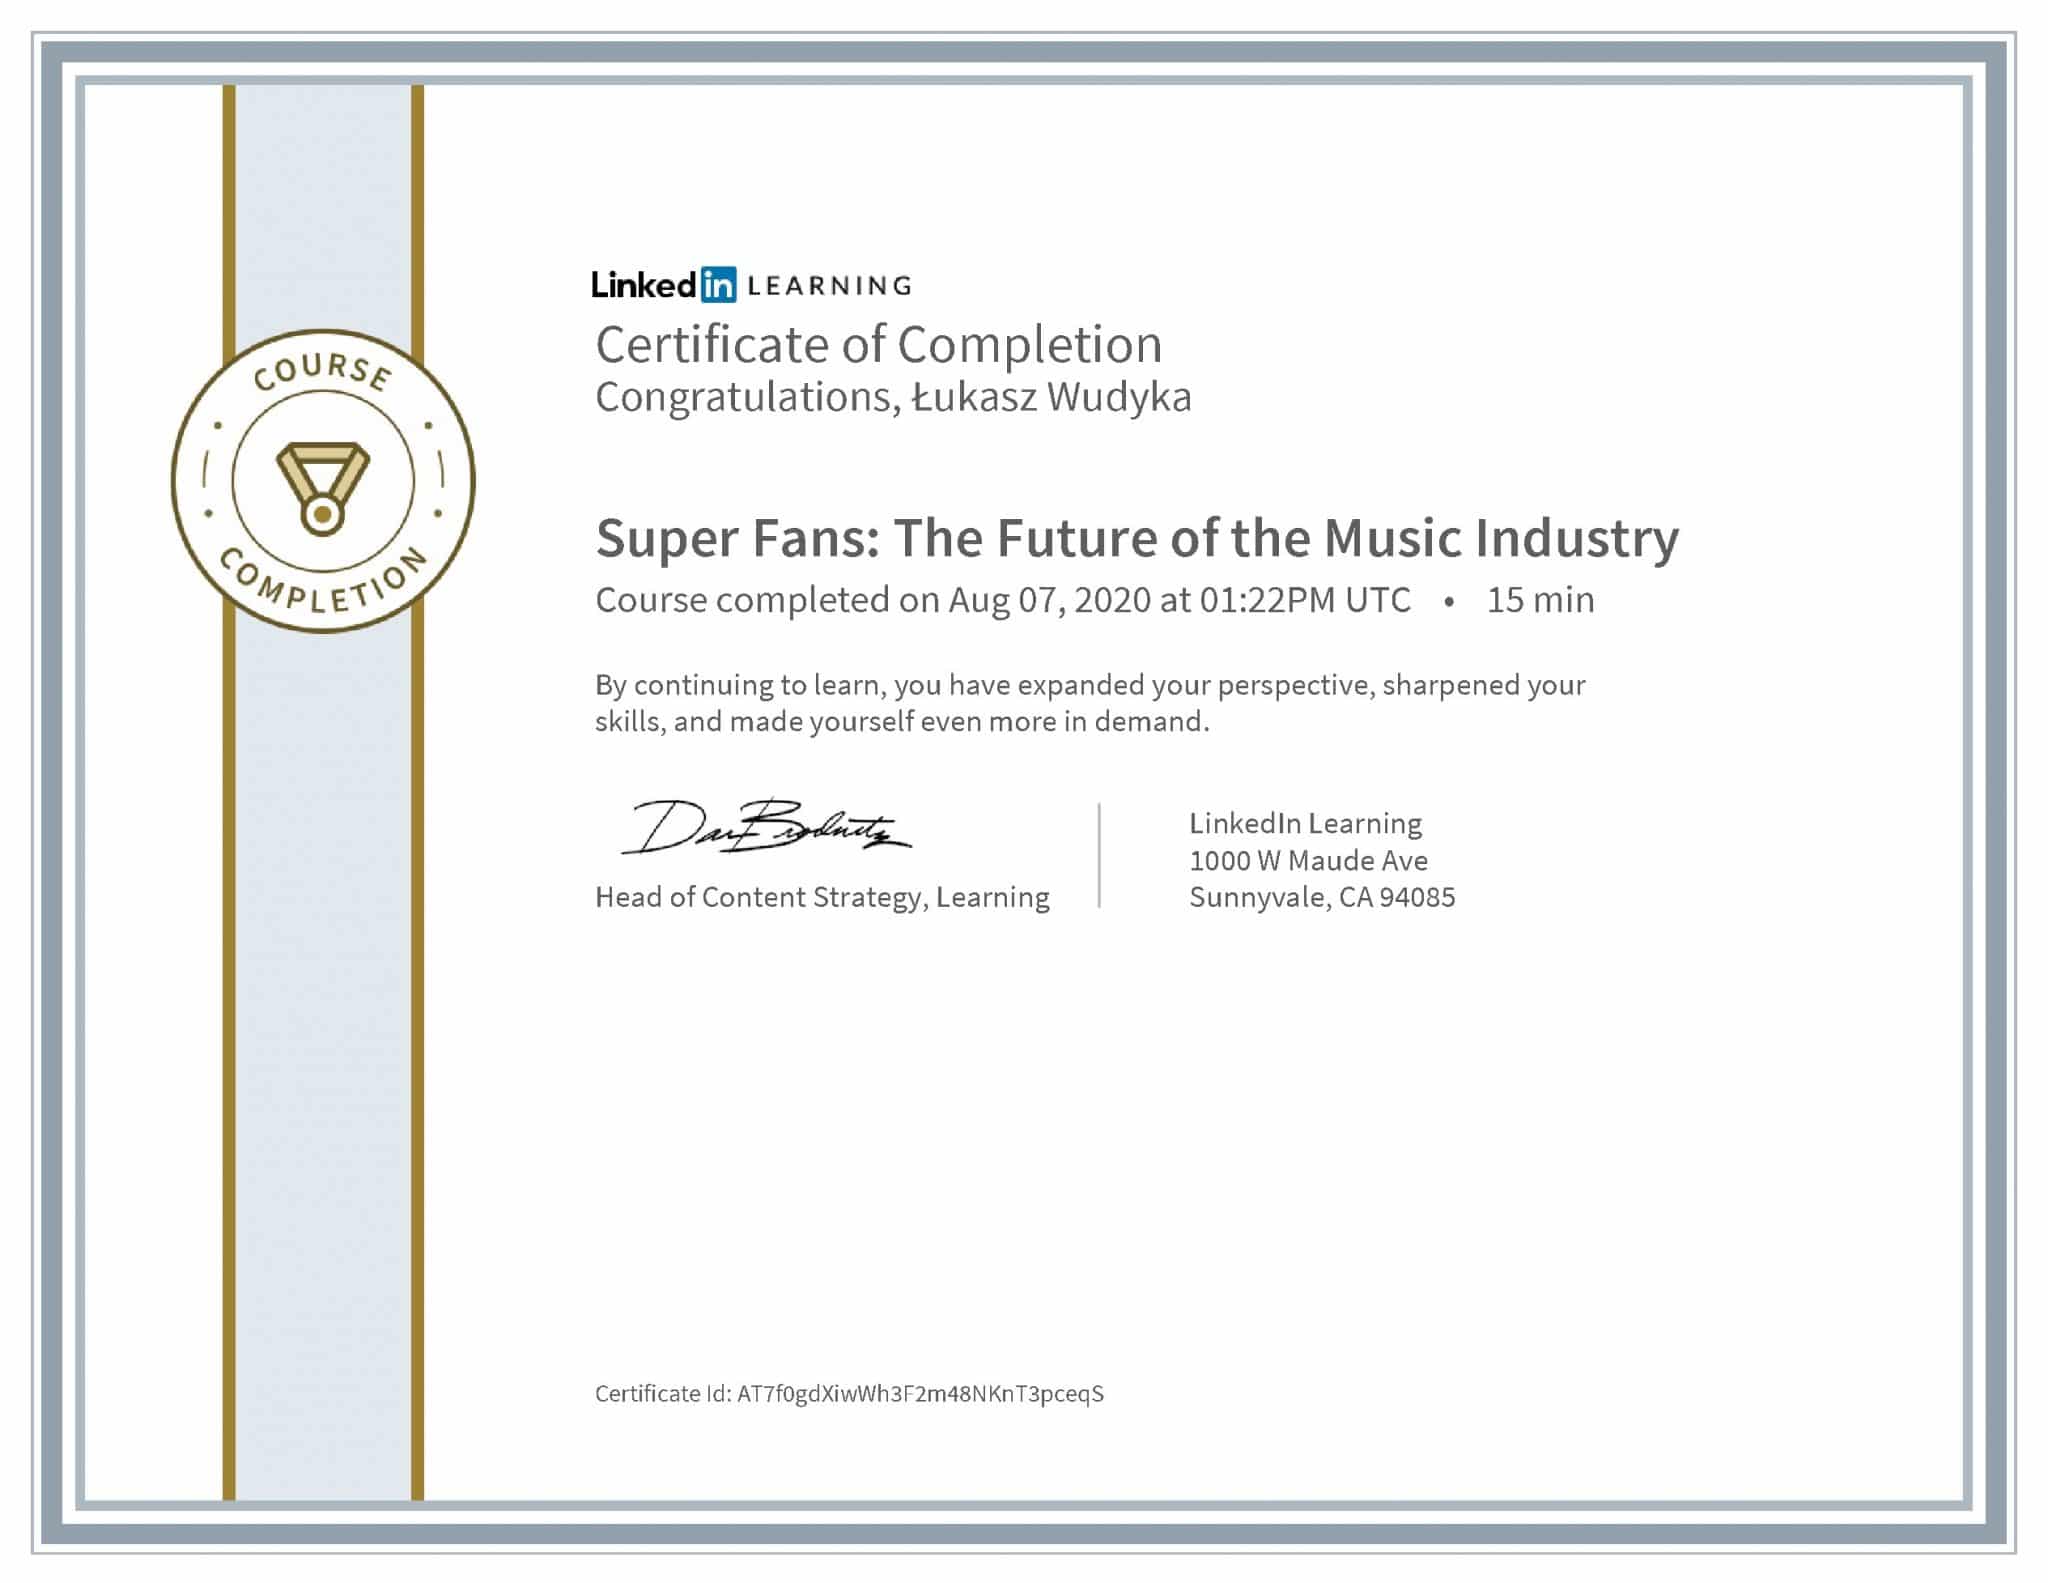 Łukasz Wudyka certyfikat LinkedIn Super Fans: The Future of the Music Industry